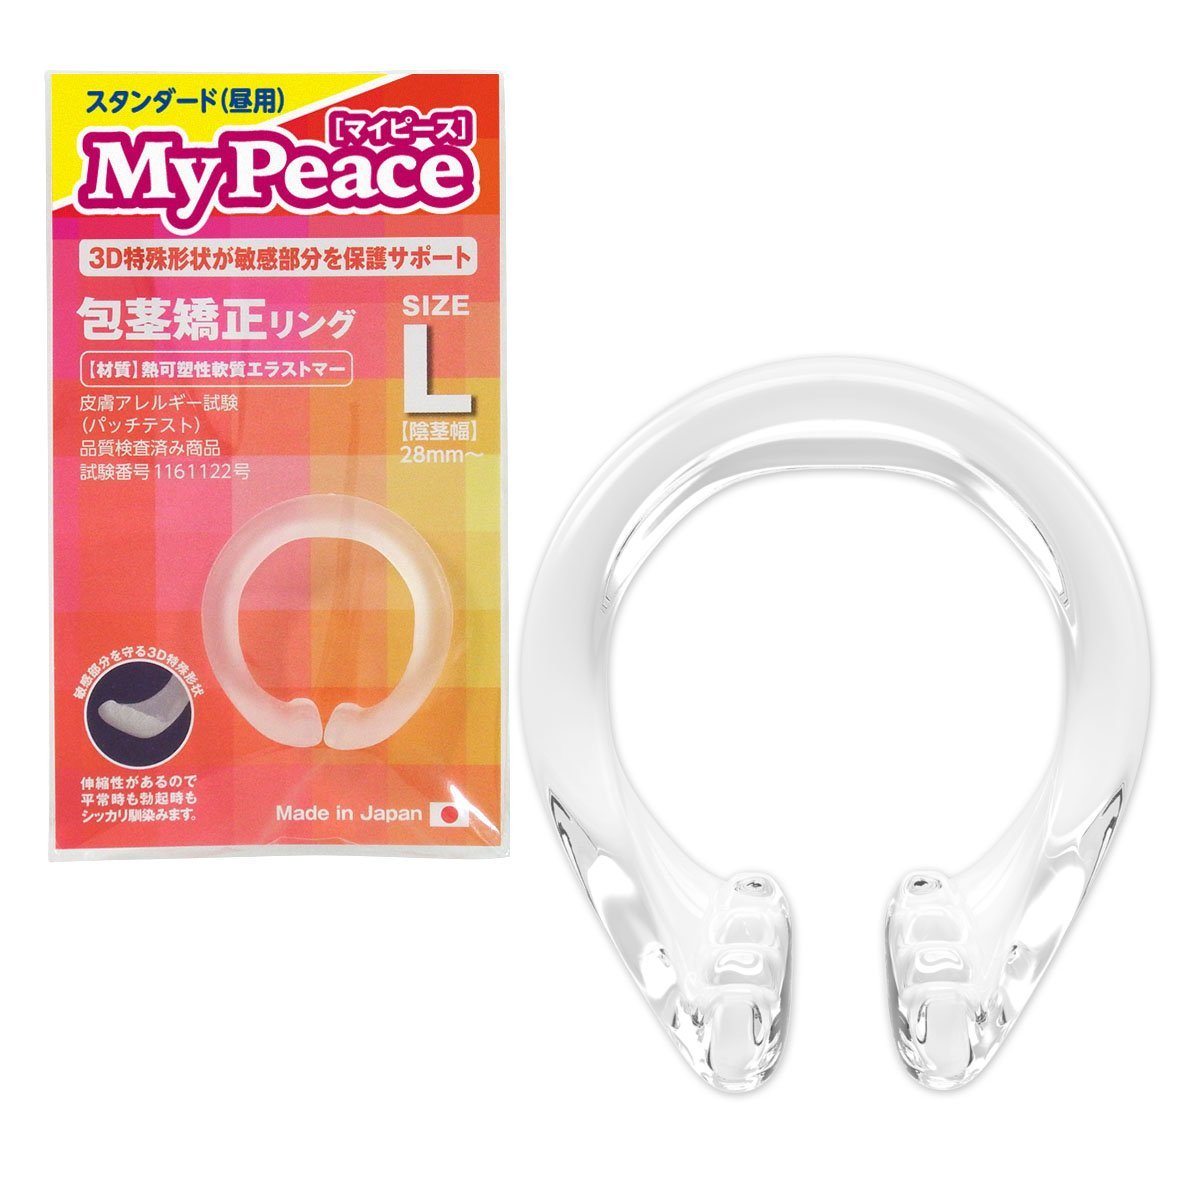 SSI JAPAN My Peace 日用標準版包莖矯正環 包莖矯正環 L 購買